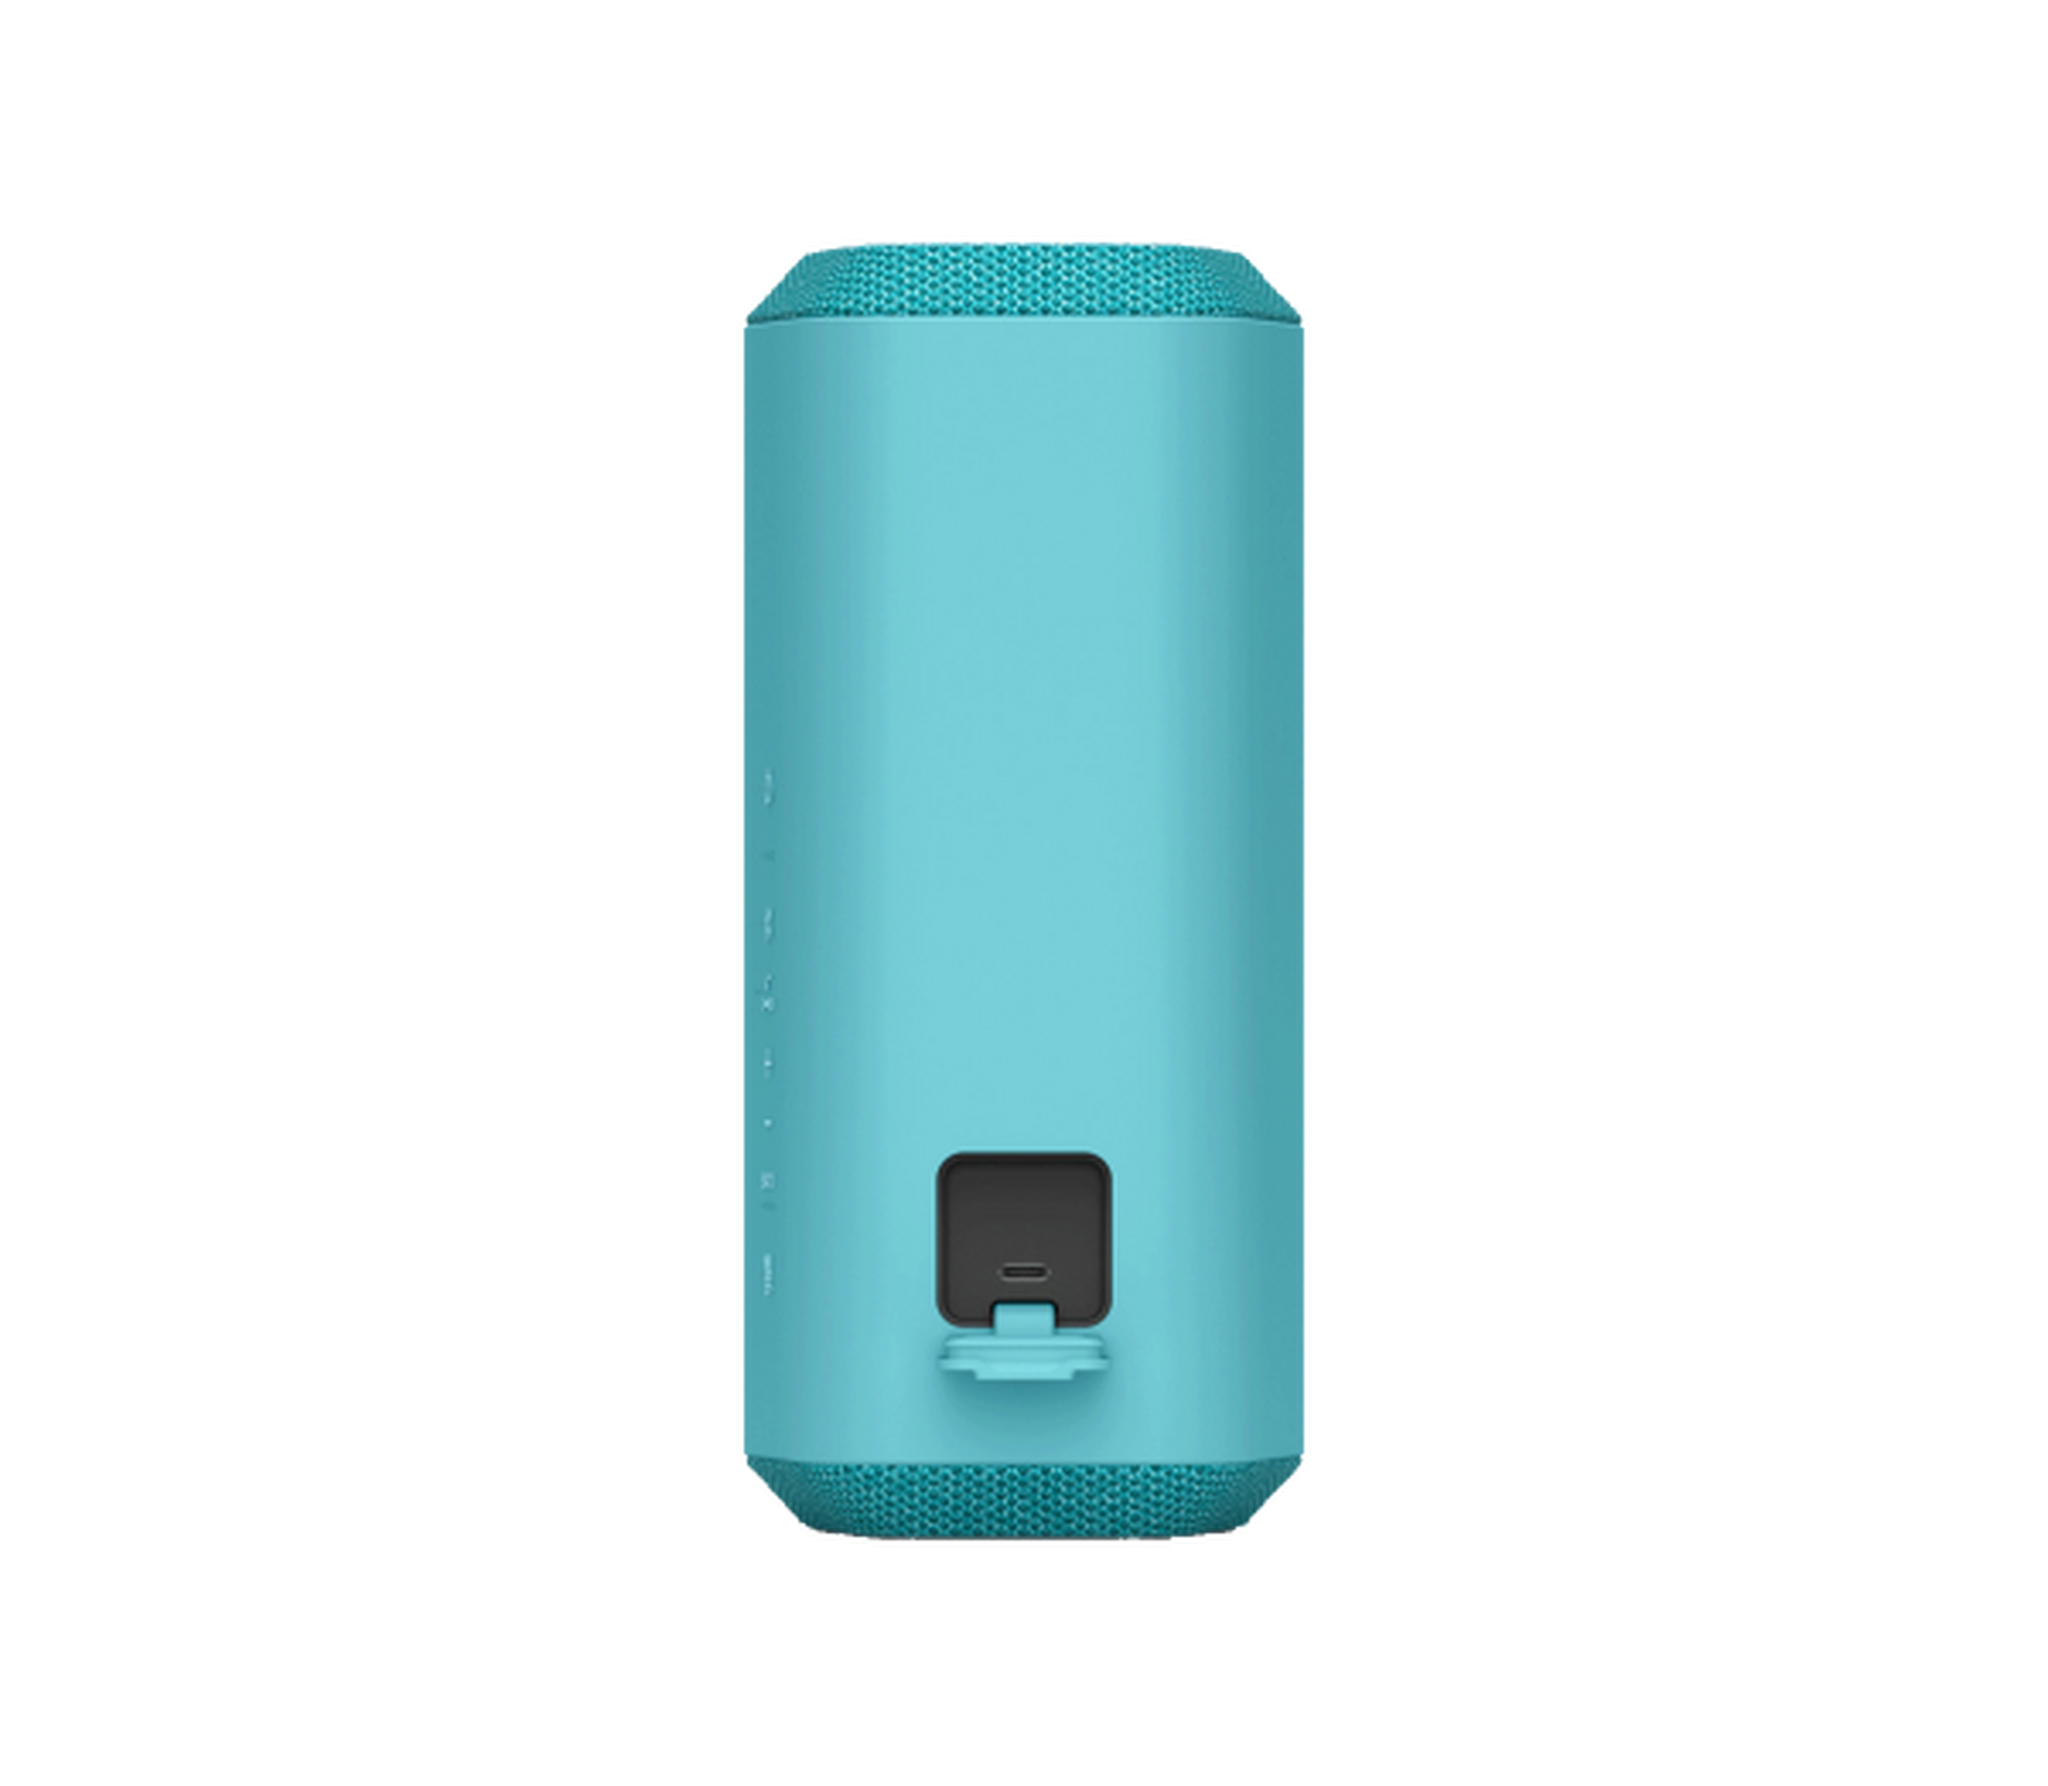 Sony Portable Bluetooth Speaker - Blue